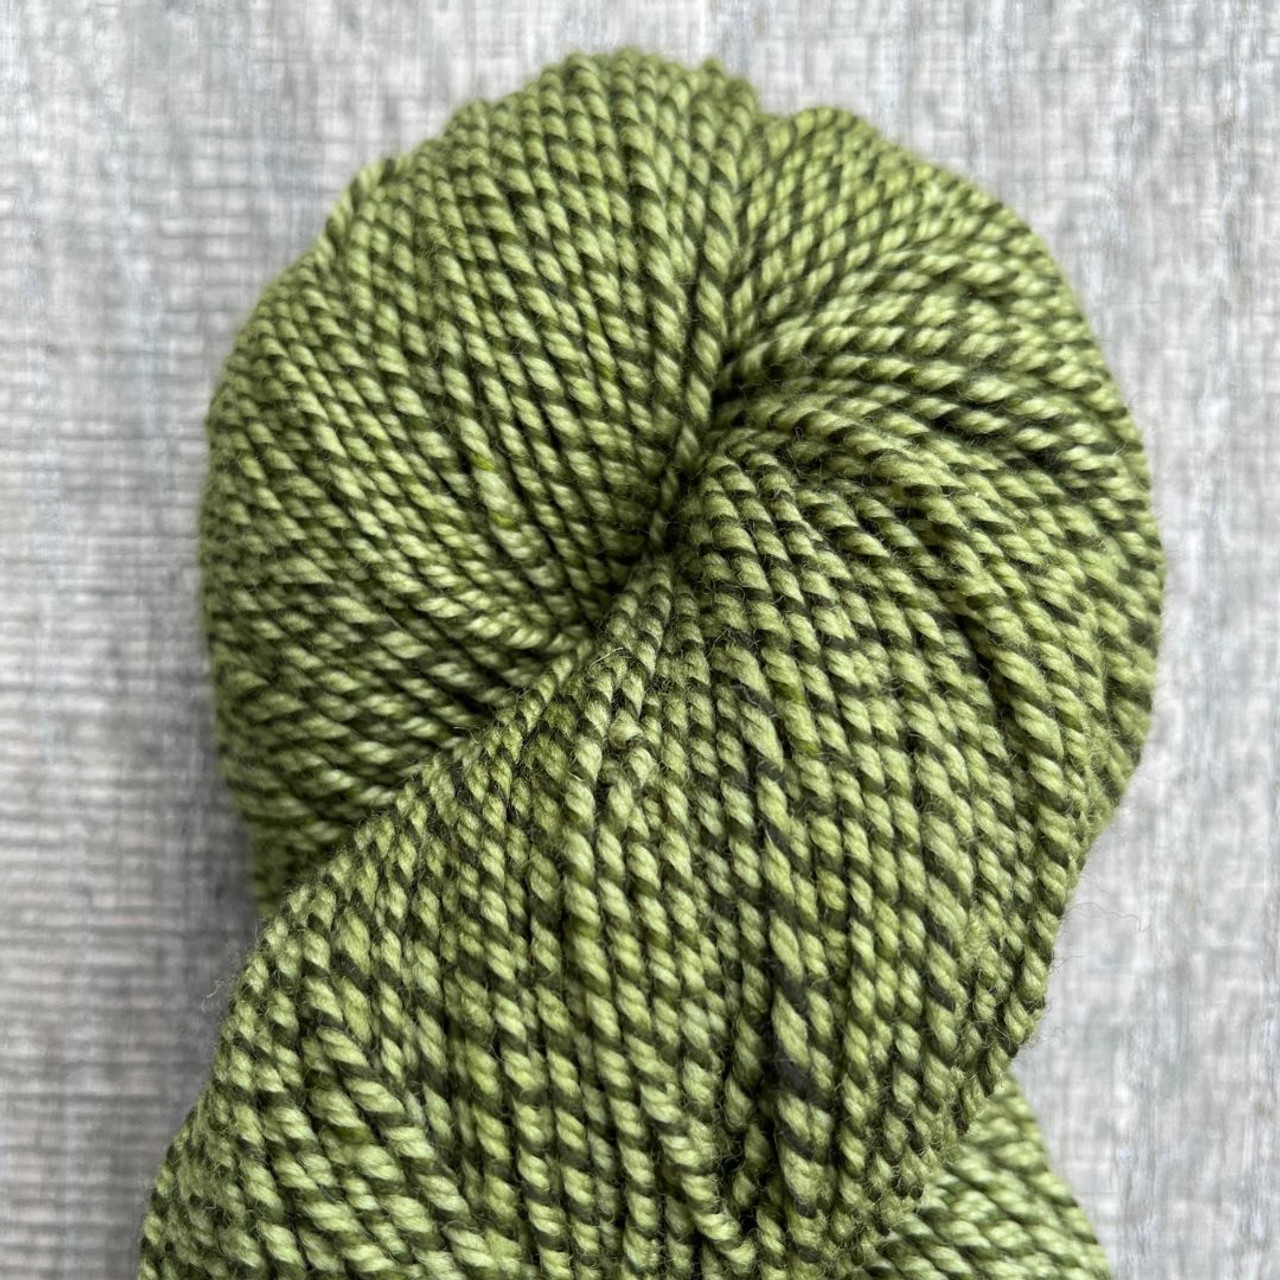 Yarn by Brand – The Twisted Ewe